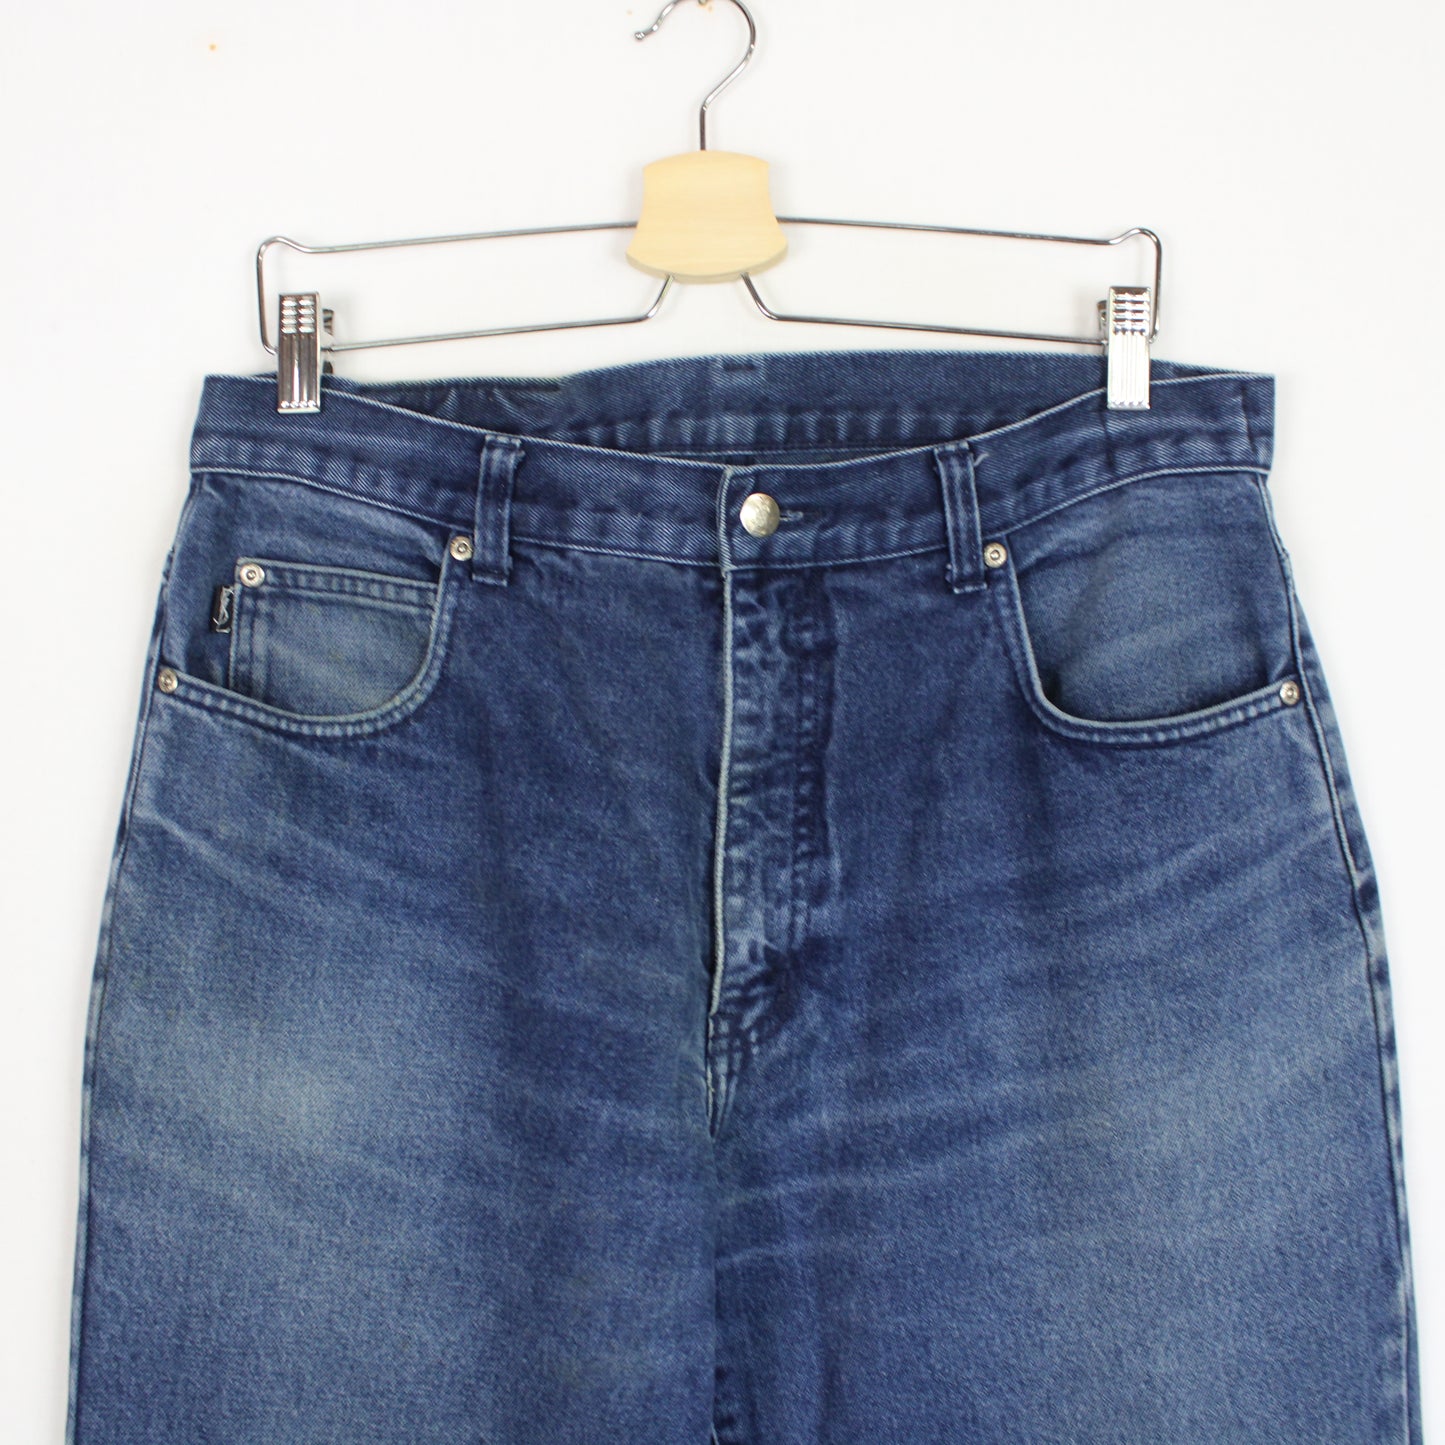 Vintage YSL Yves Saint Laurent Denim Jeans - 34x32